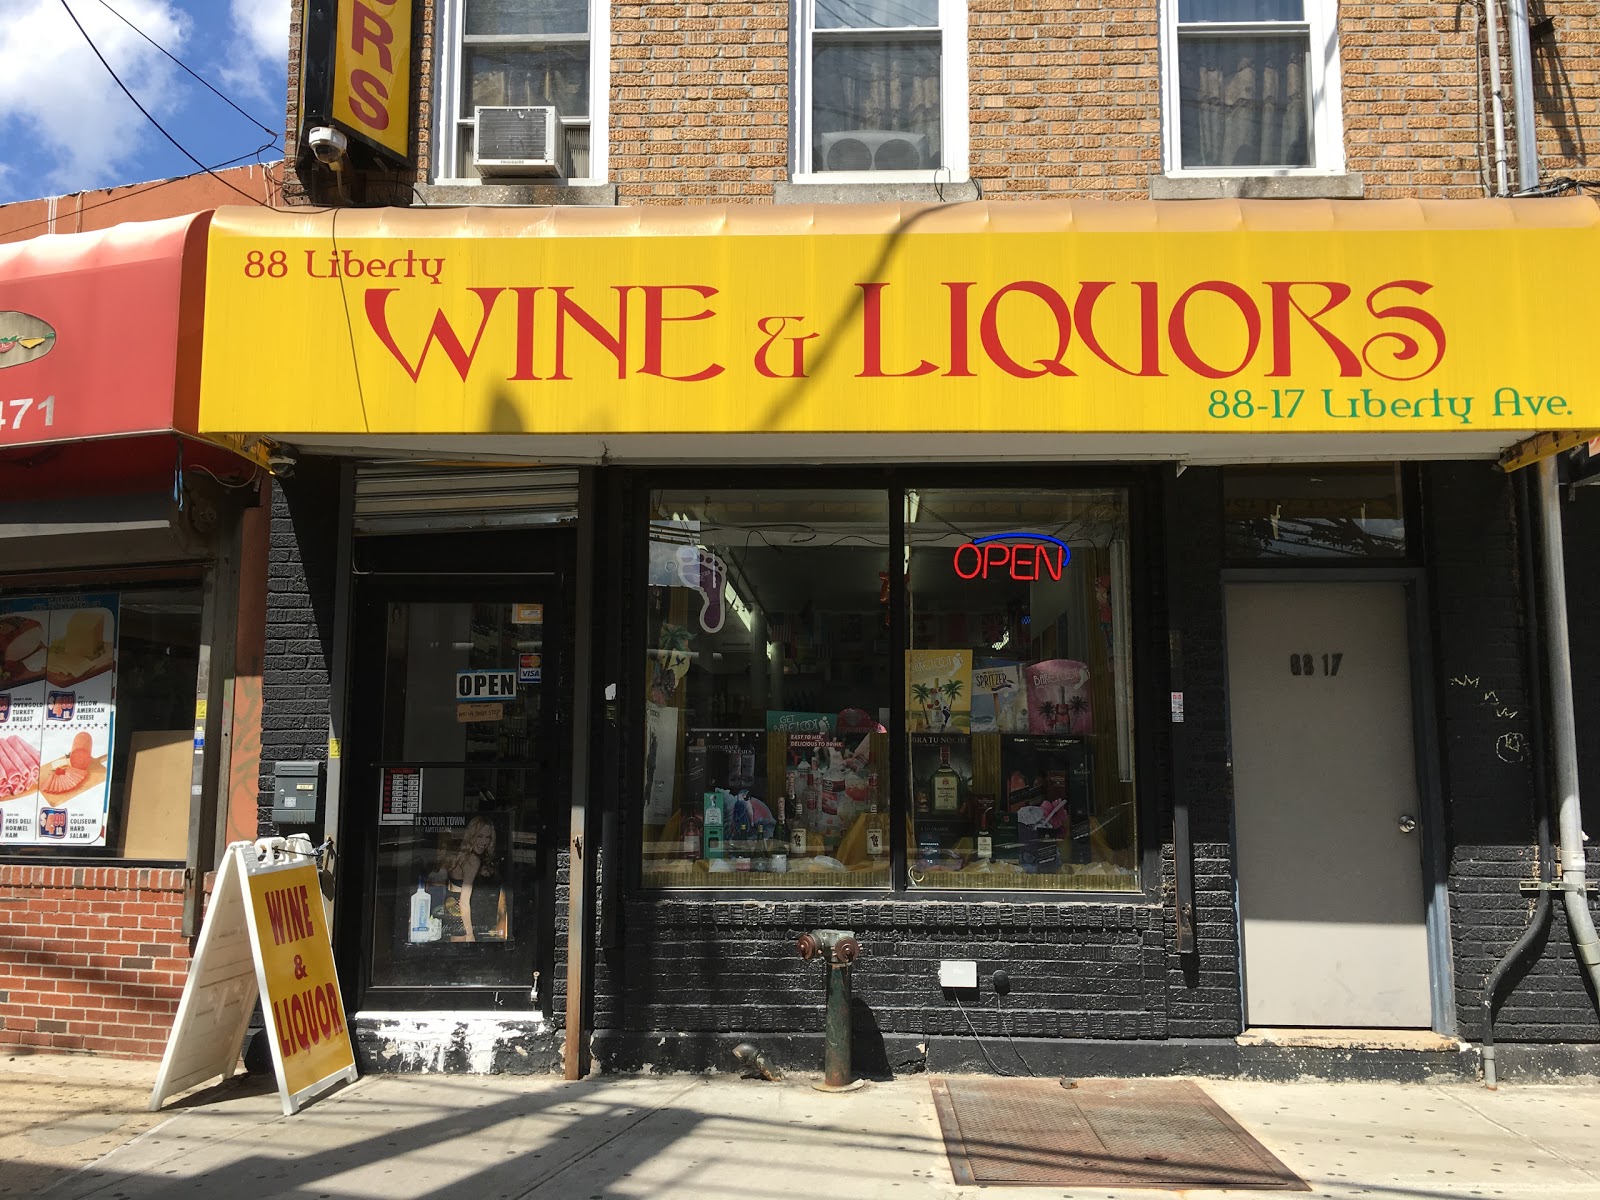 Photo of 88 Liberty Wine & Liquor in New York City, New York, United States - 1 Picture of Point of interest, Establishment, Store, Liquor store